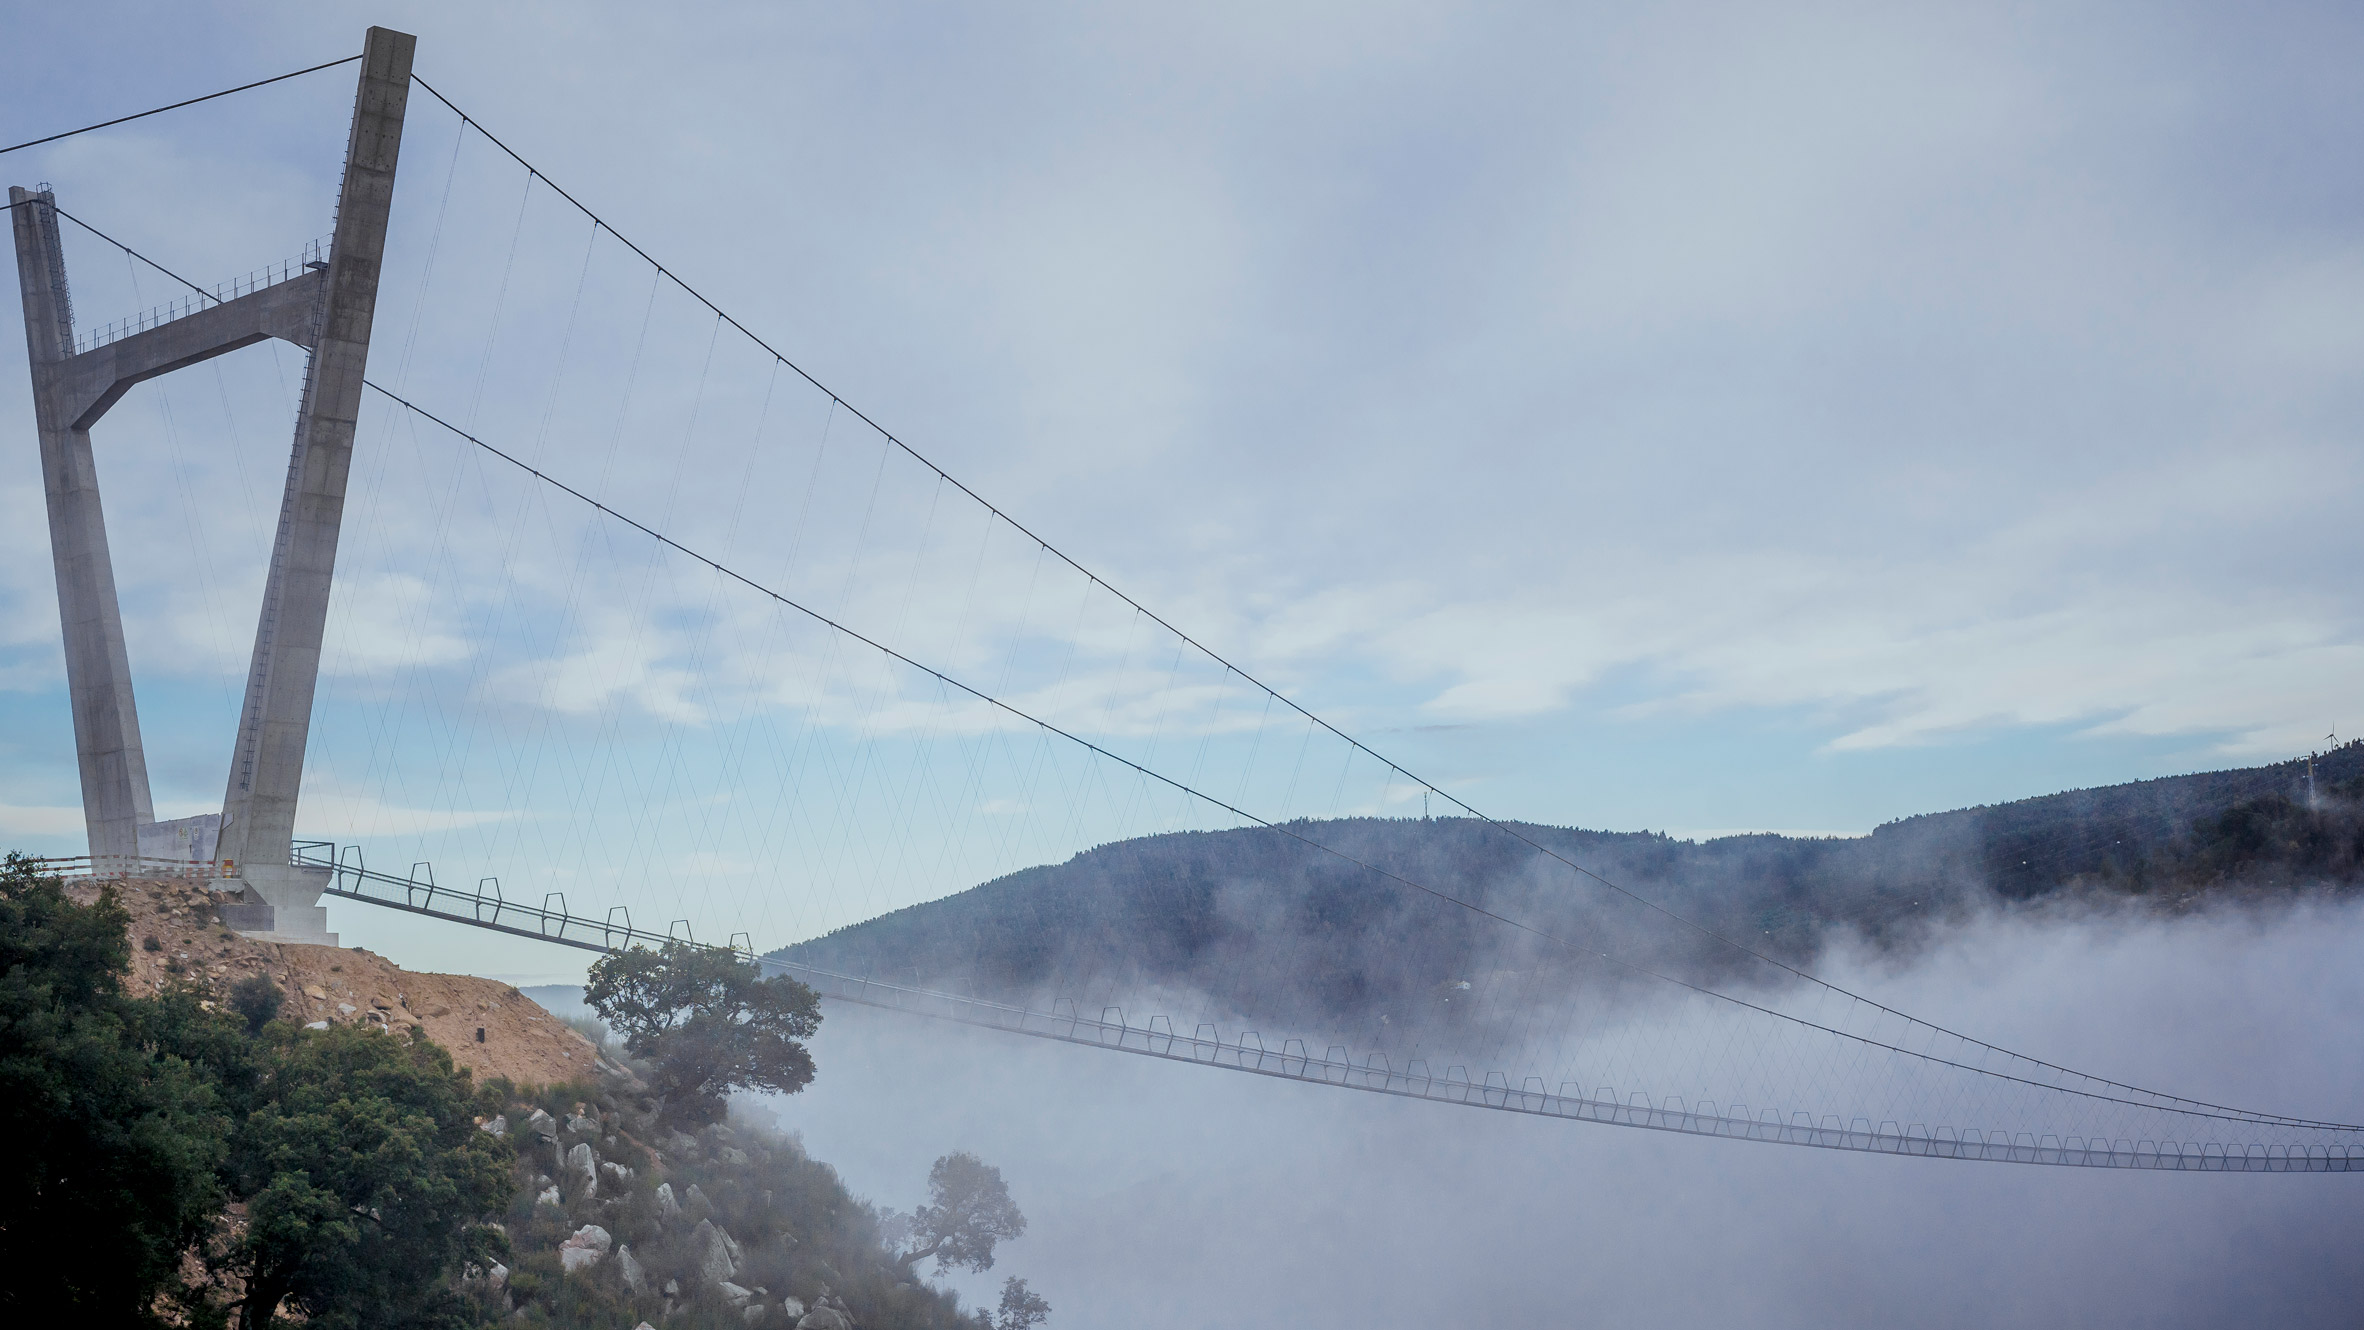 World's longest pedestrian suspension bridge